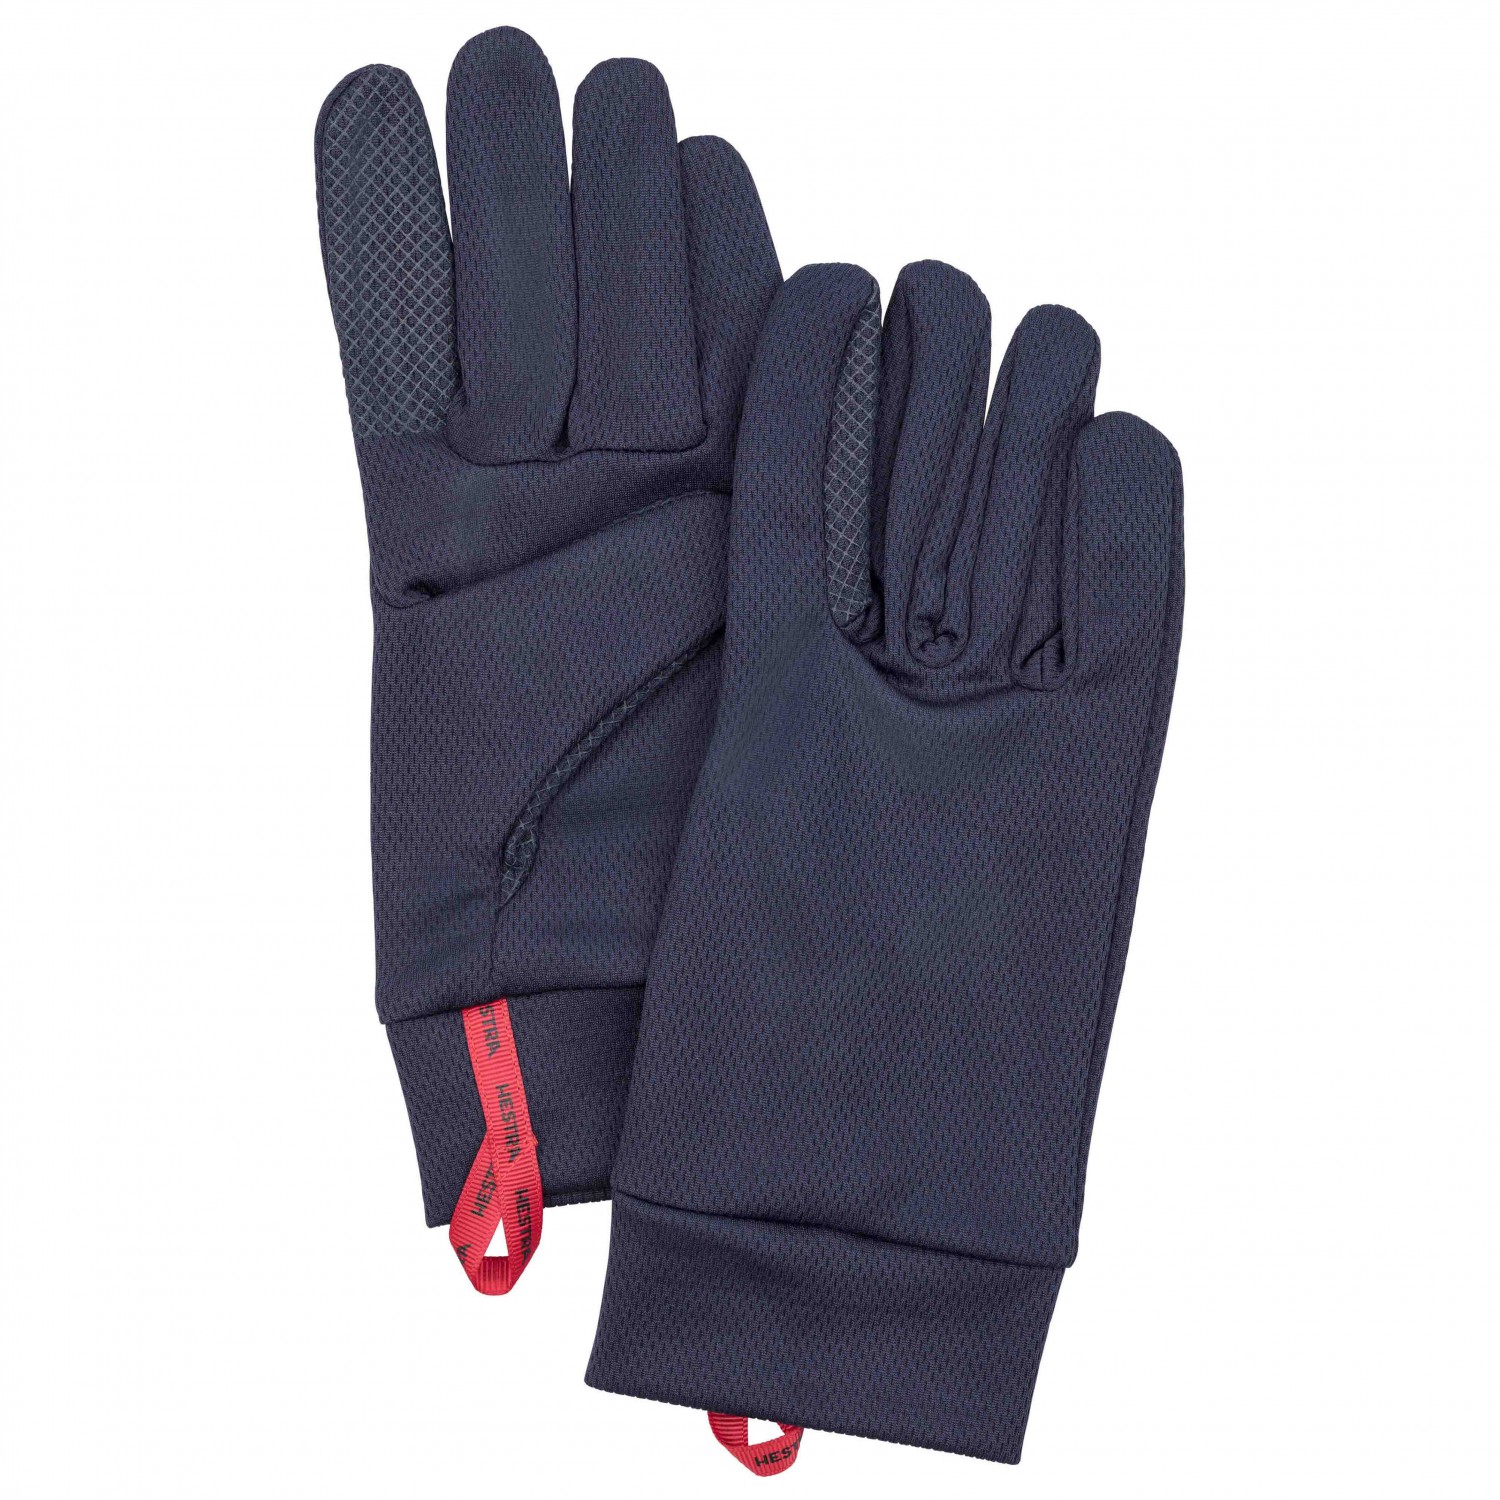 Перчатки Hestra Touch Point Dry Wool 5 Finger, темно синий детские бейсбольные перчатки перчатки для отдыха на природе мужские перчатки glives раздвижные перчатки для малышей